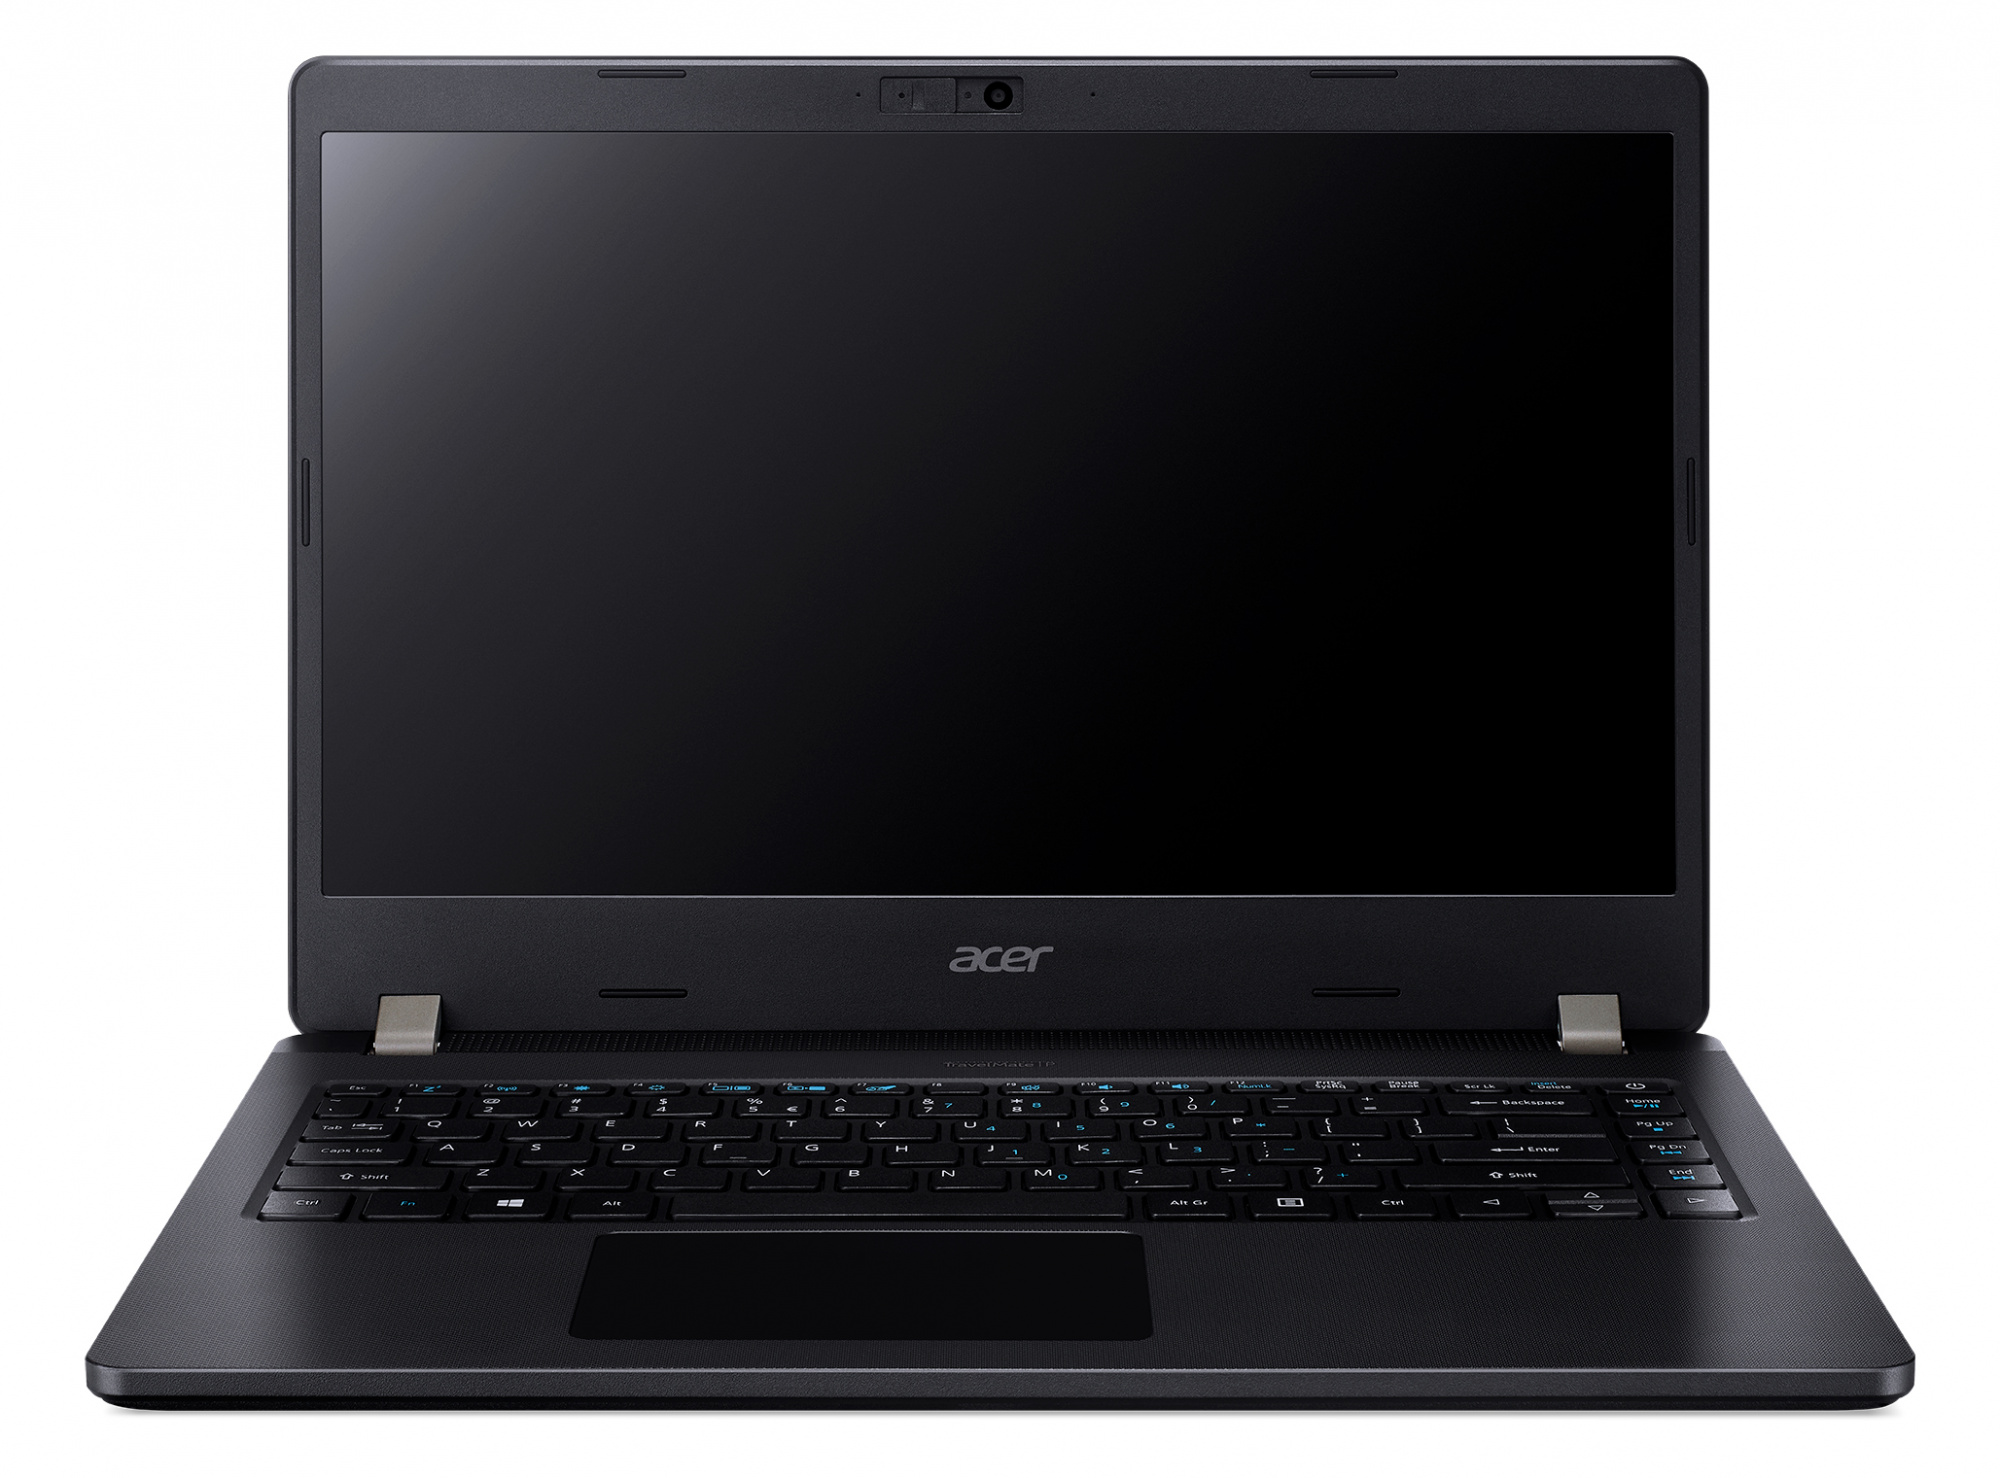 Aspire v5 характеристики. Acer Aspire v5 552g. Ноутбук Acer Aspire v5. Acer v5-572g. Ноутбук Acer Aspire v5-572g.